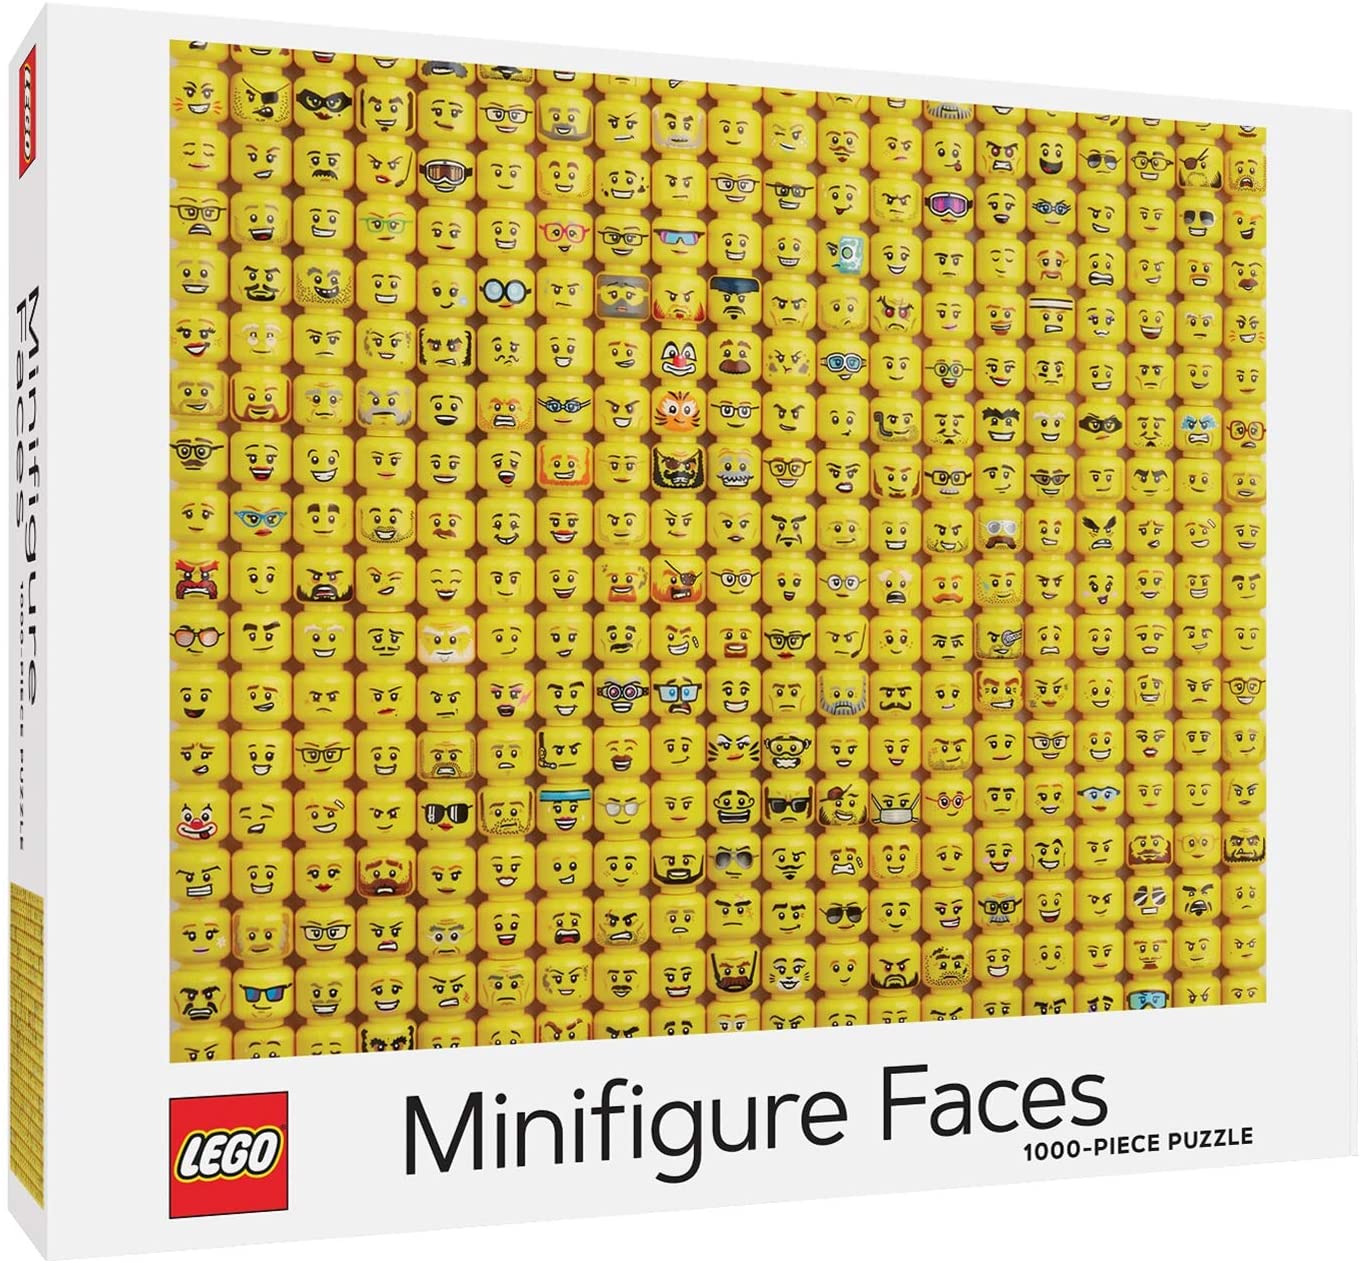 1000-Piece LEGO Minifigure Faces Jigsaw Puzzle $10 + FS w/ Walmart+ or FS on $35+